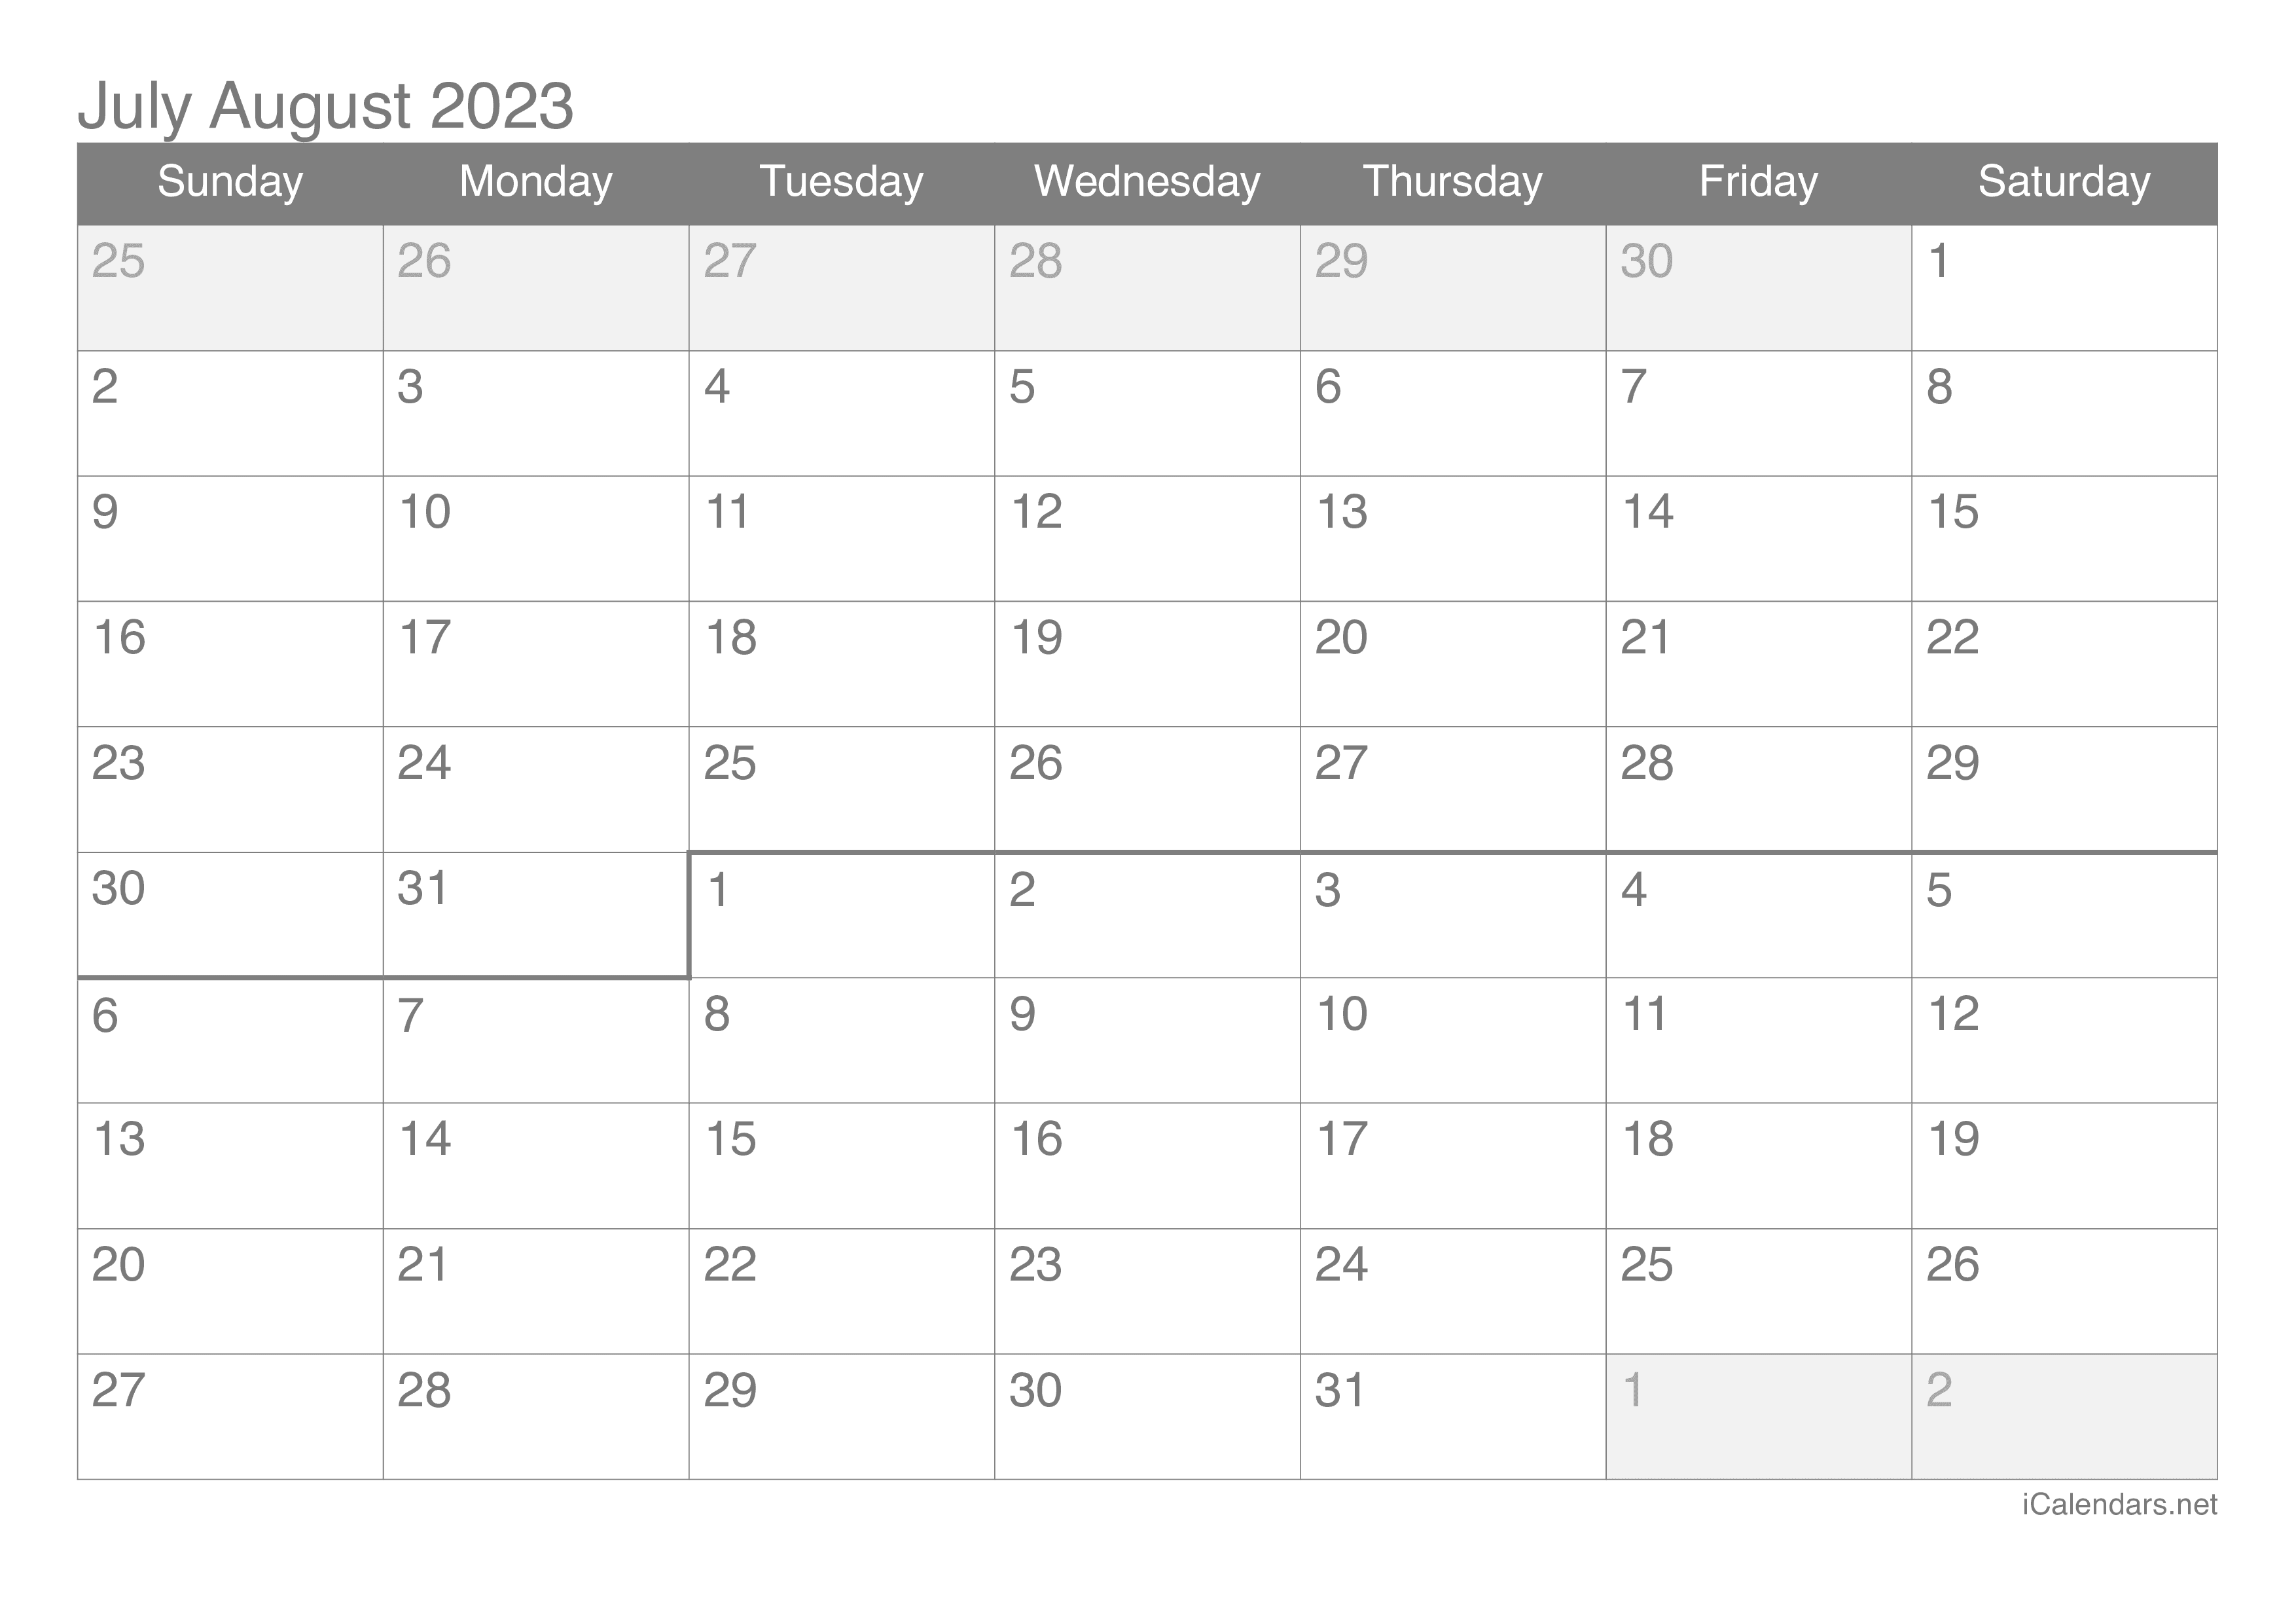 July and August 2023 Printable Calendar - icalendars.net